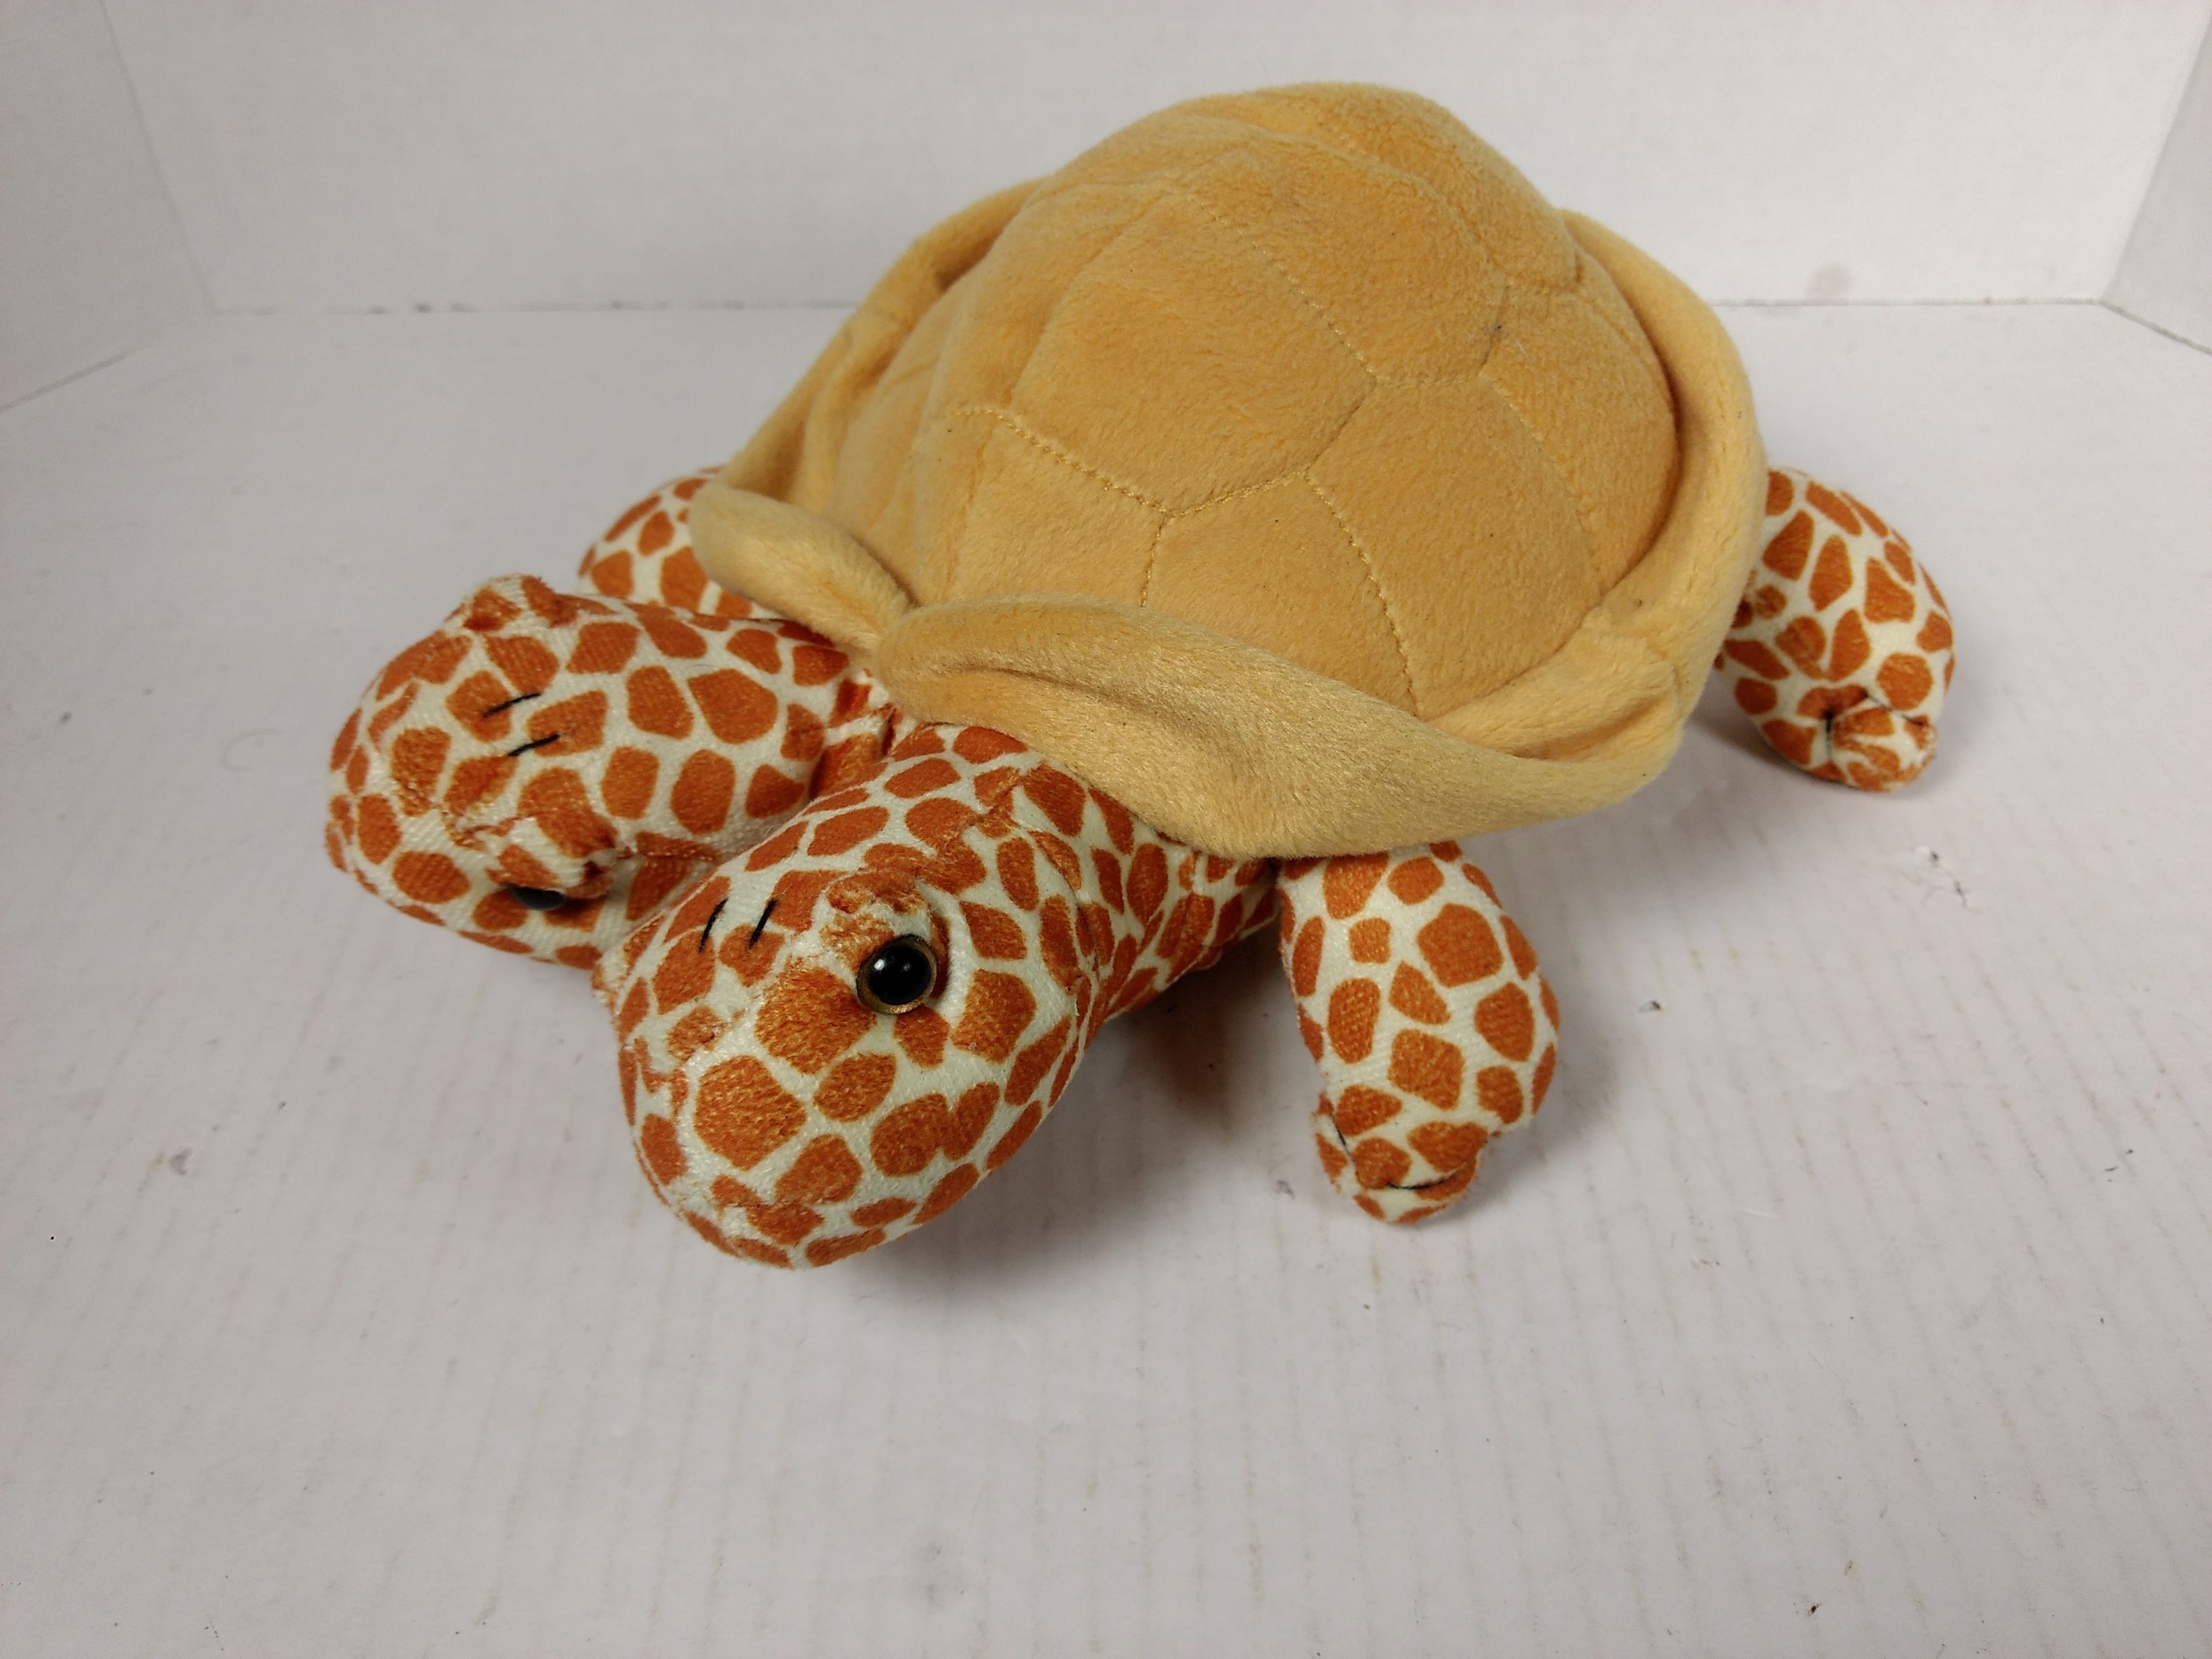 Ripley’s Aquariums Two Headed Turtle Tortoise Plush Animal Believe It or Not